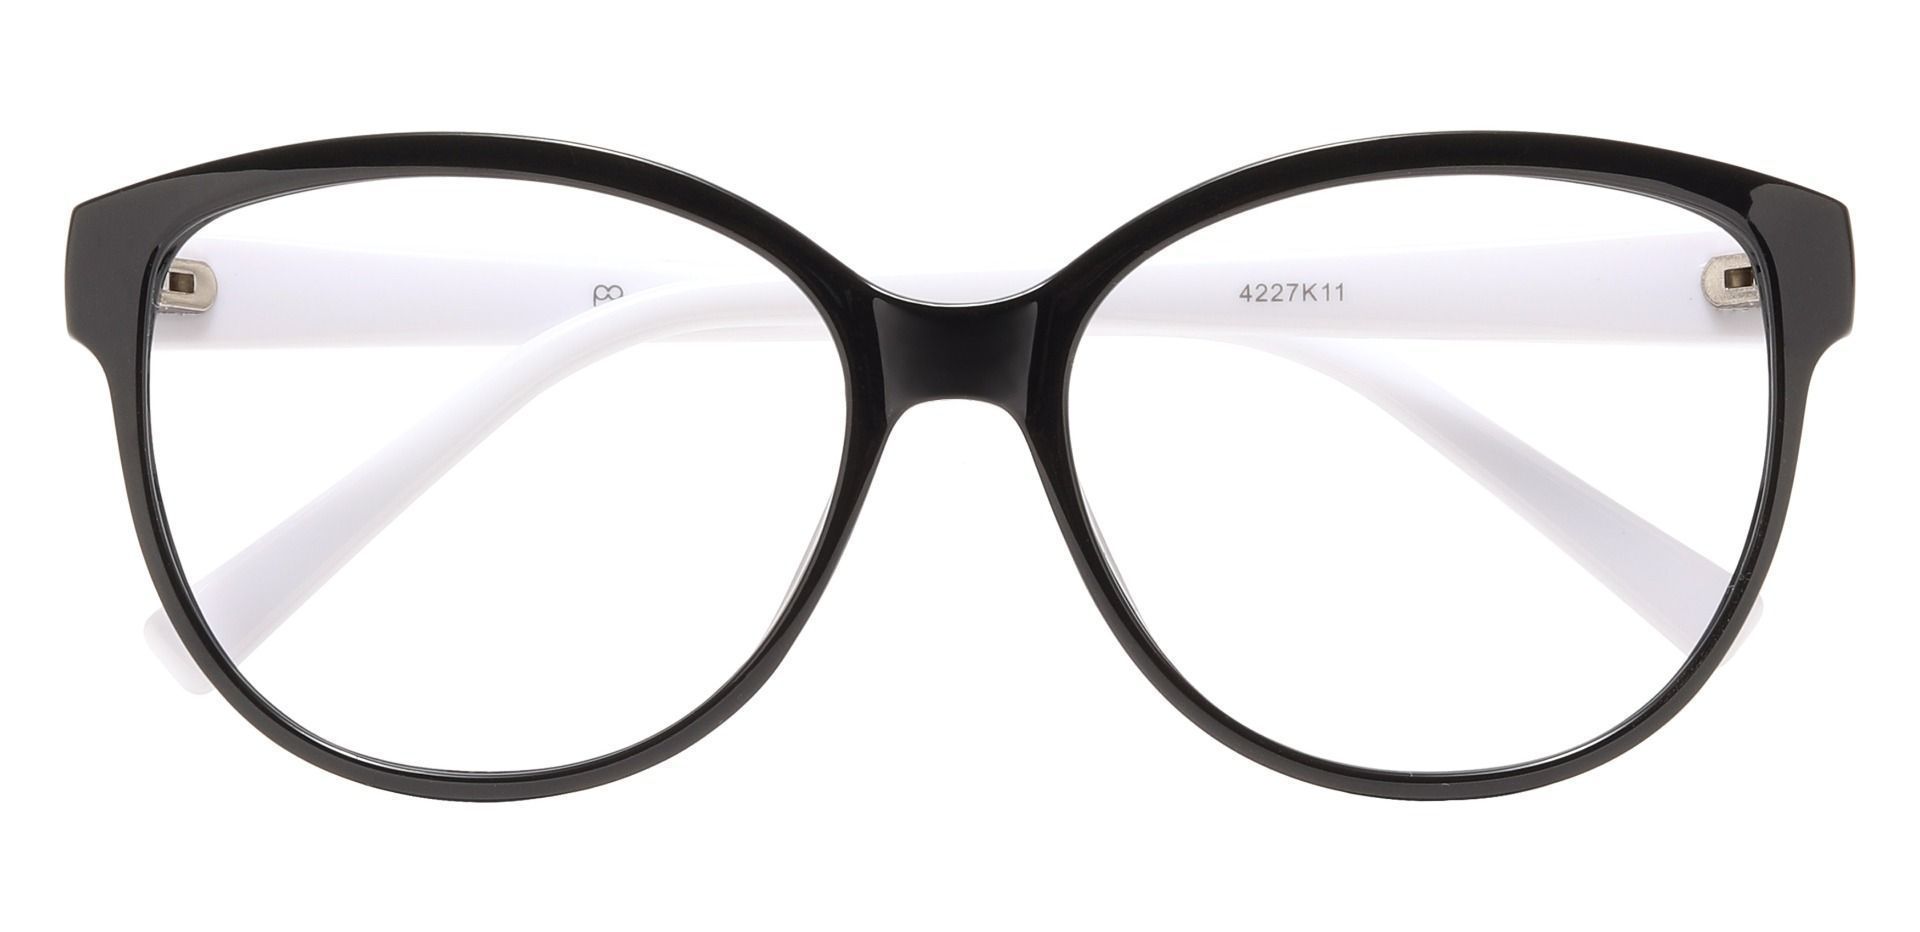 Rabia Oval Lined Bifocal Glasses - Black